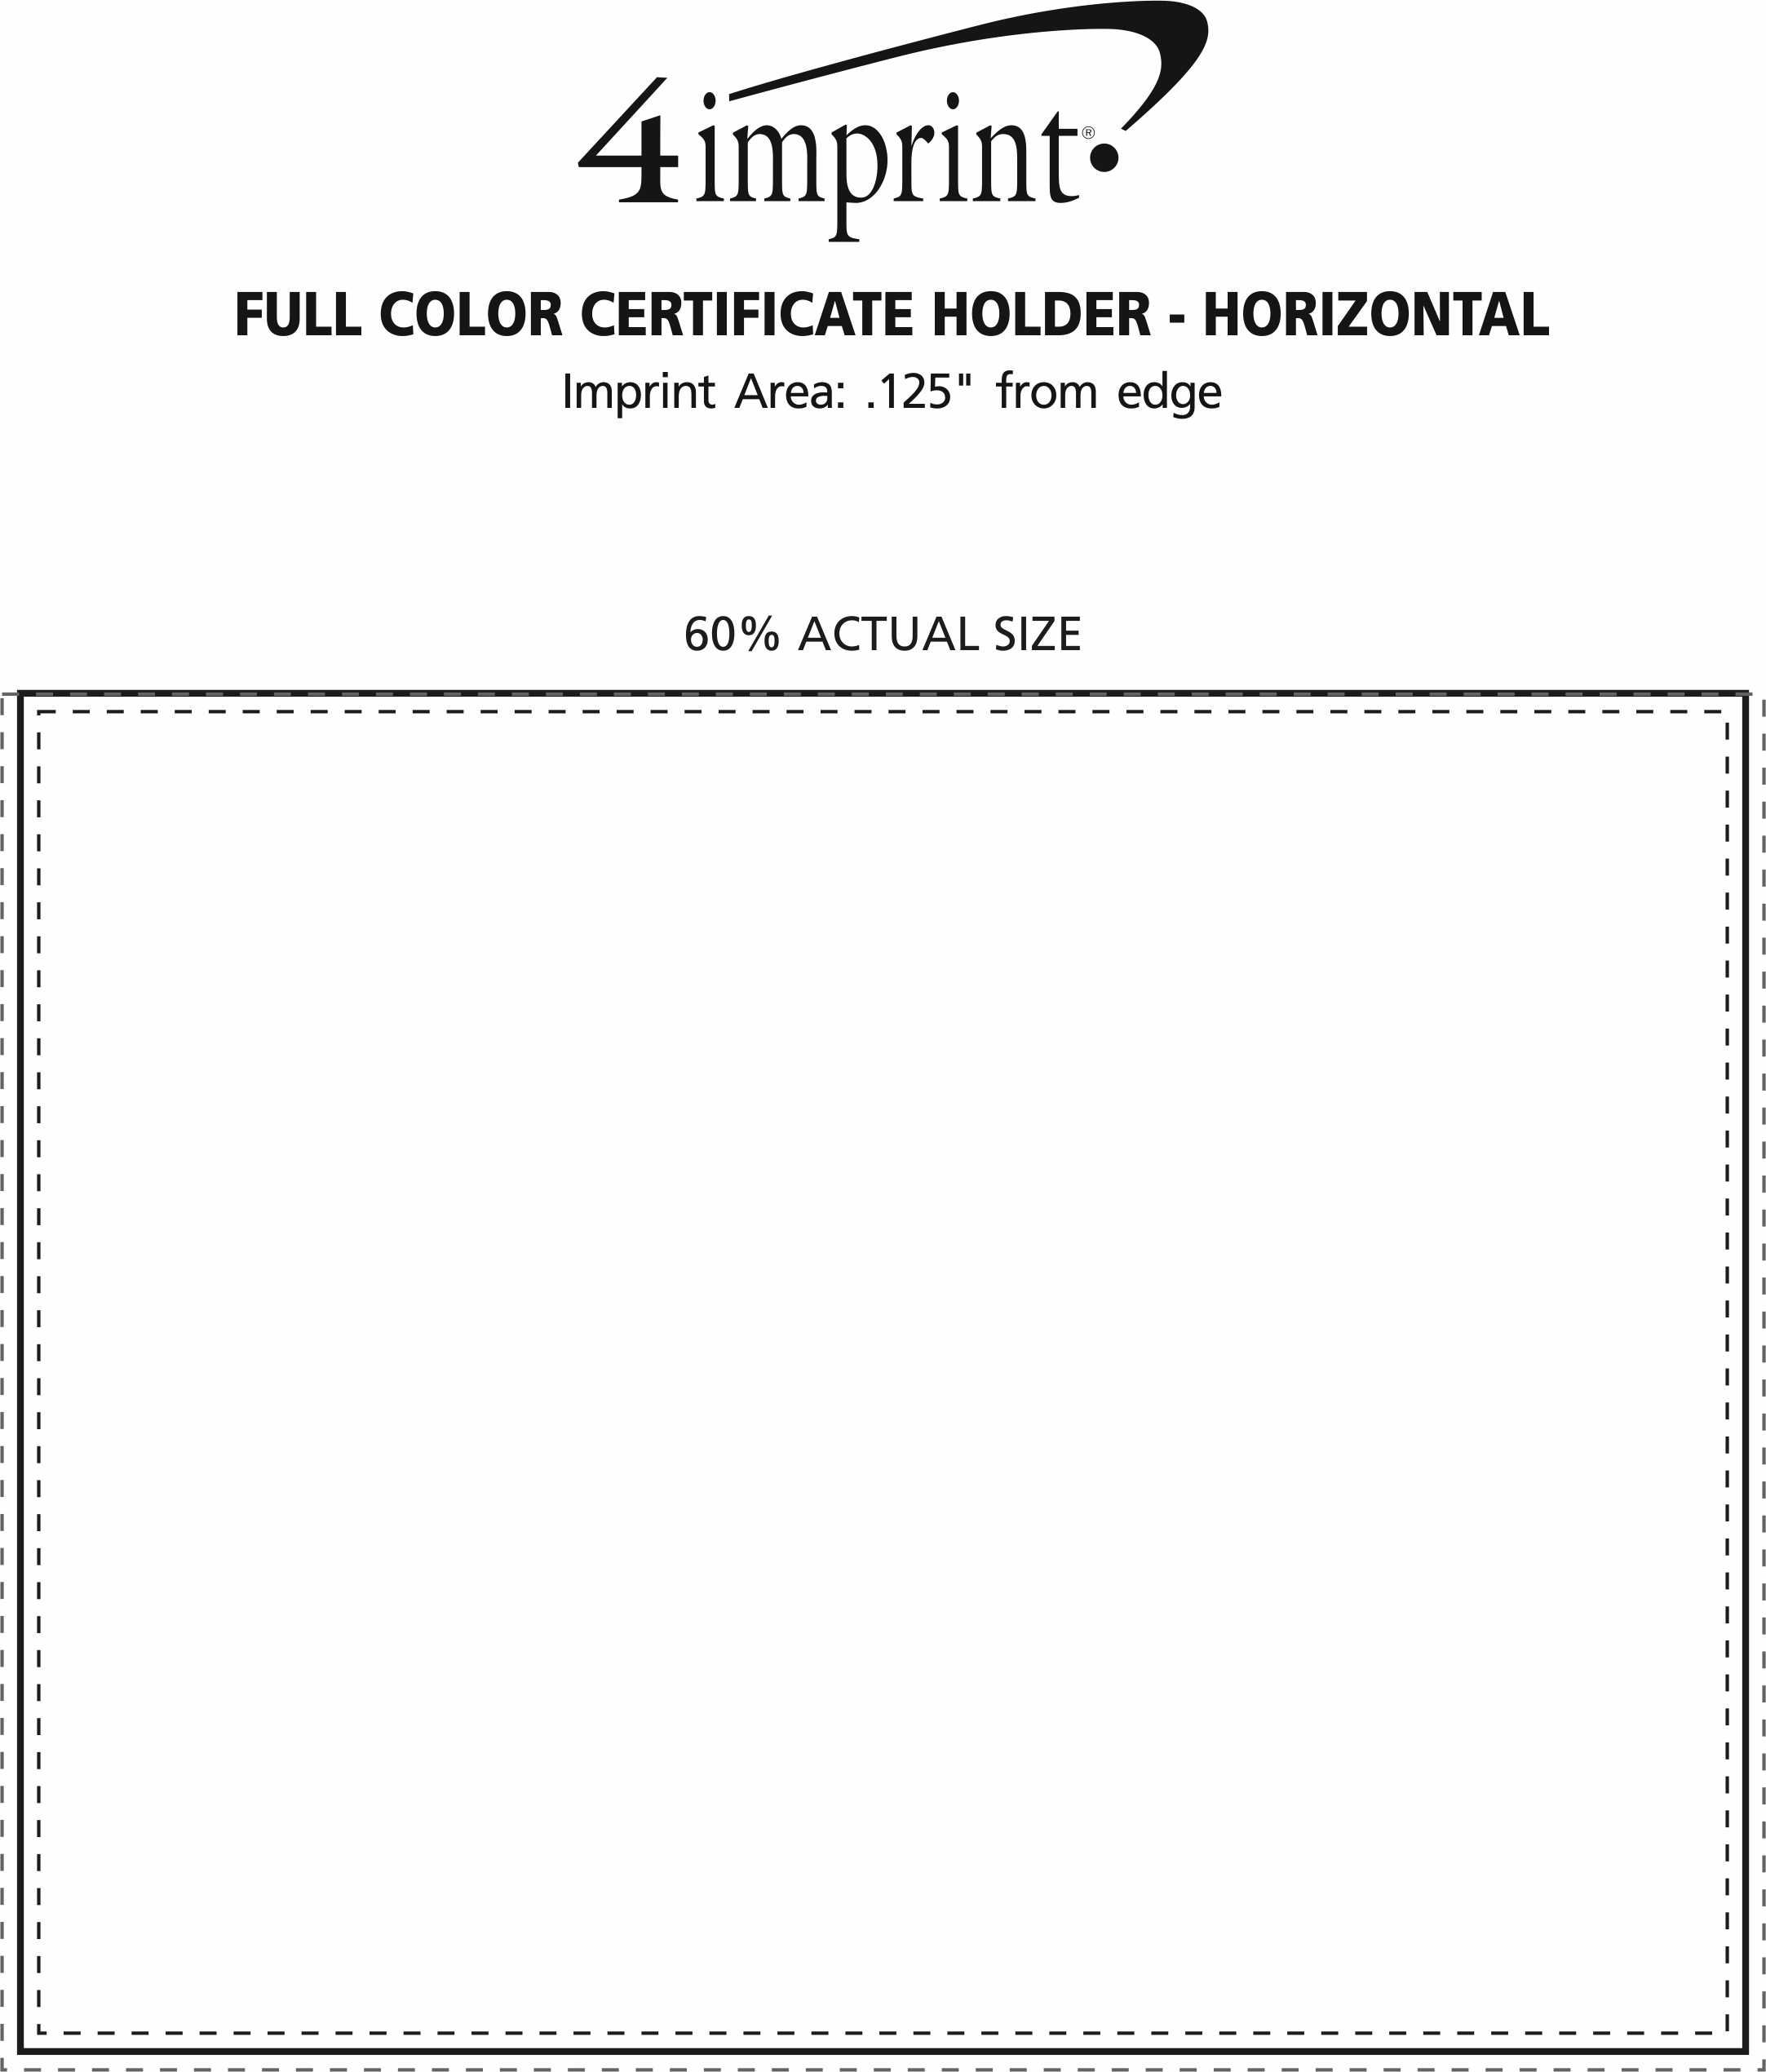 Imprint Area of Full Color Certificate Holder - Horizontal - 24 hr